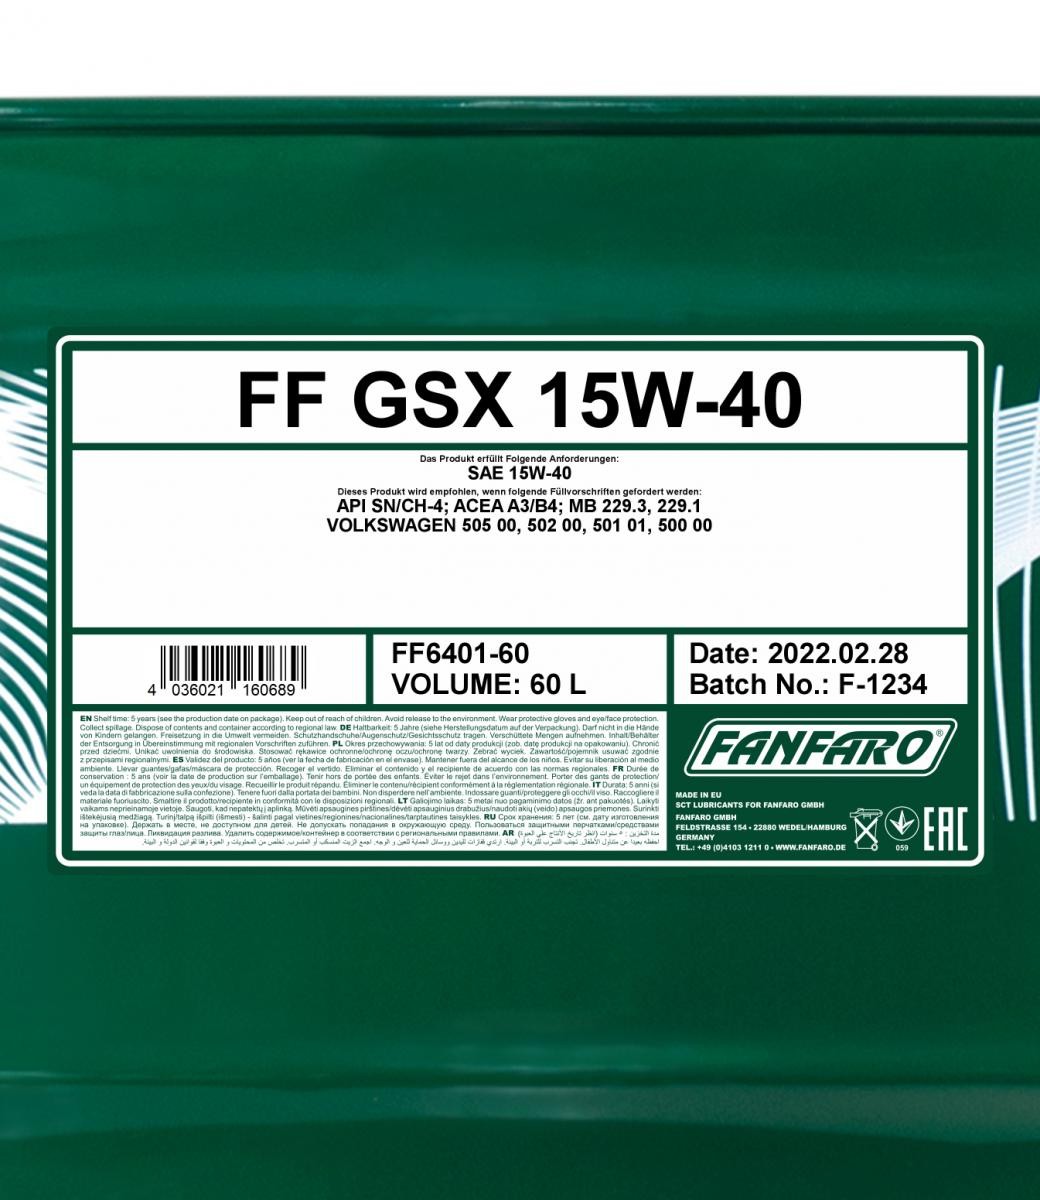 FANFARO Motoröl FF6401-60